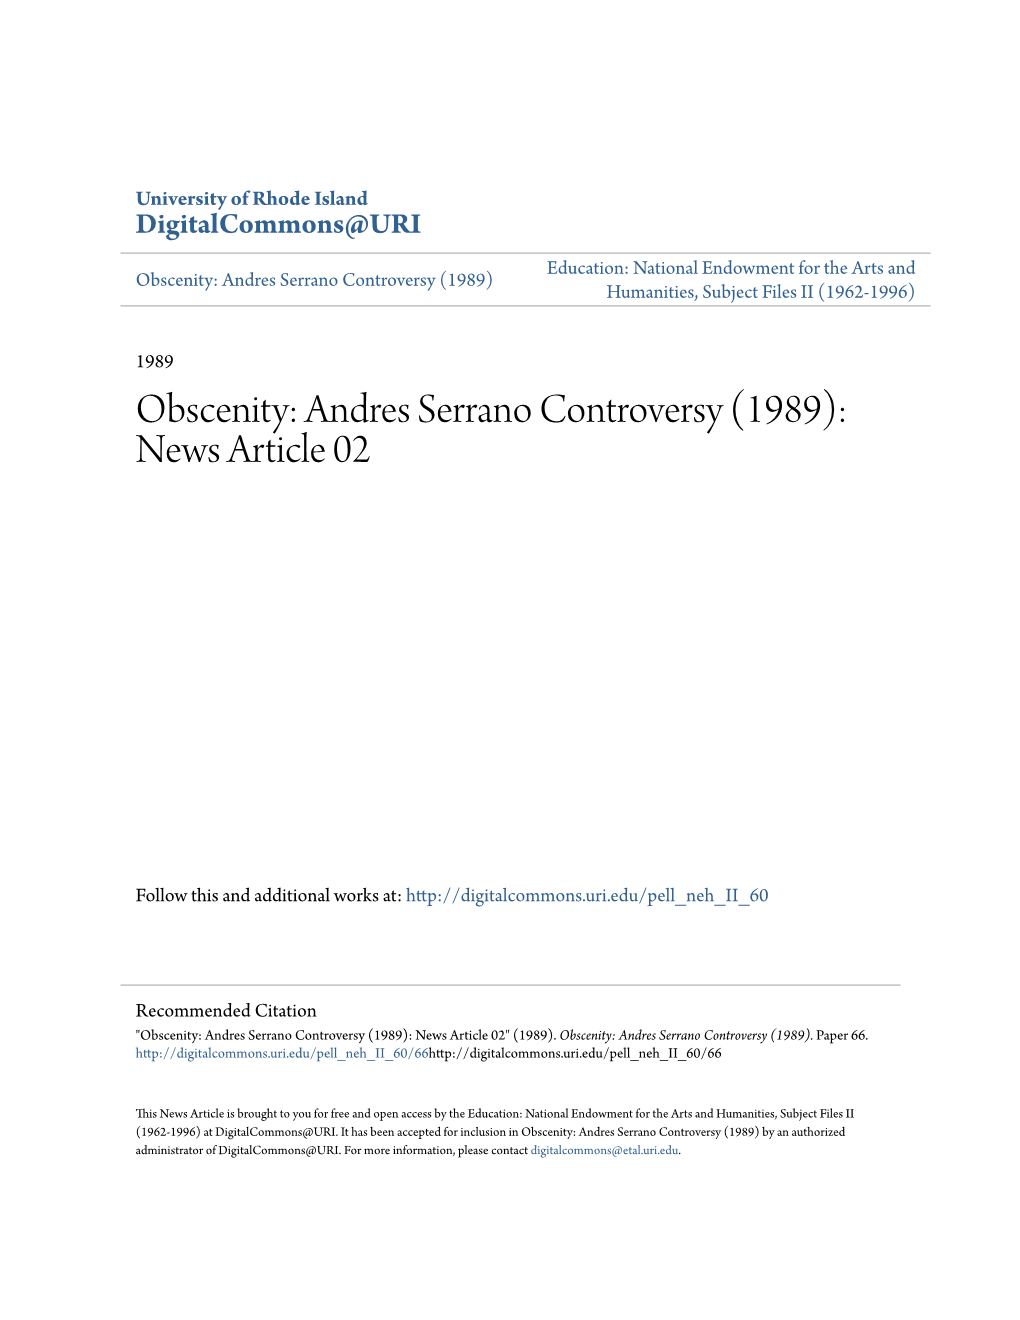 Obscenity: Andres Serrano Controversy (1989): News Article 02